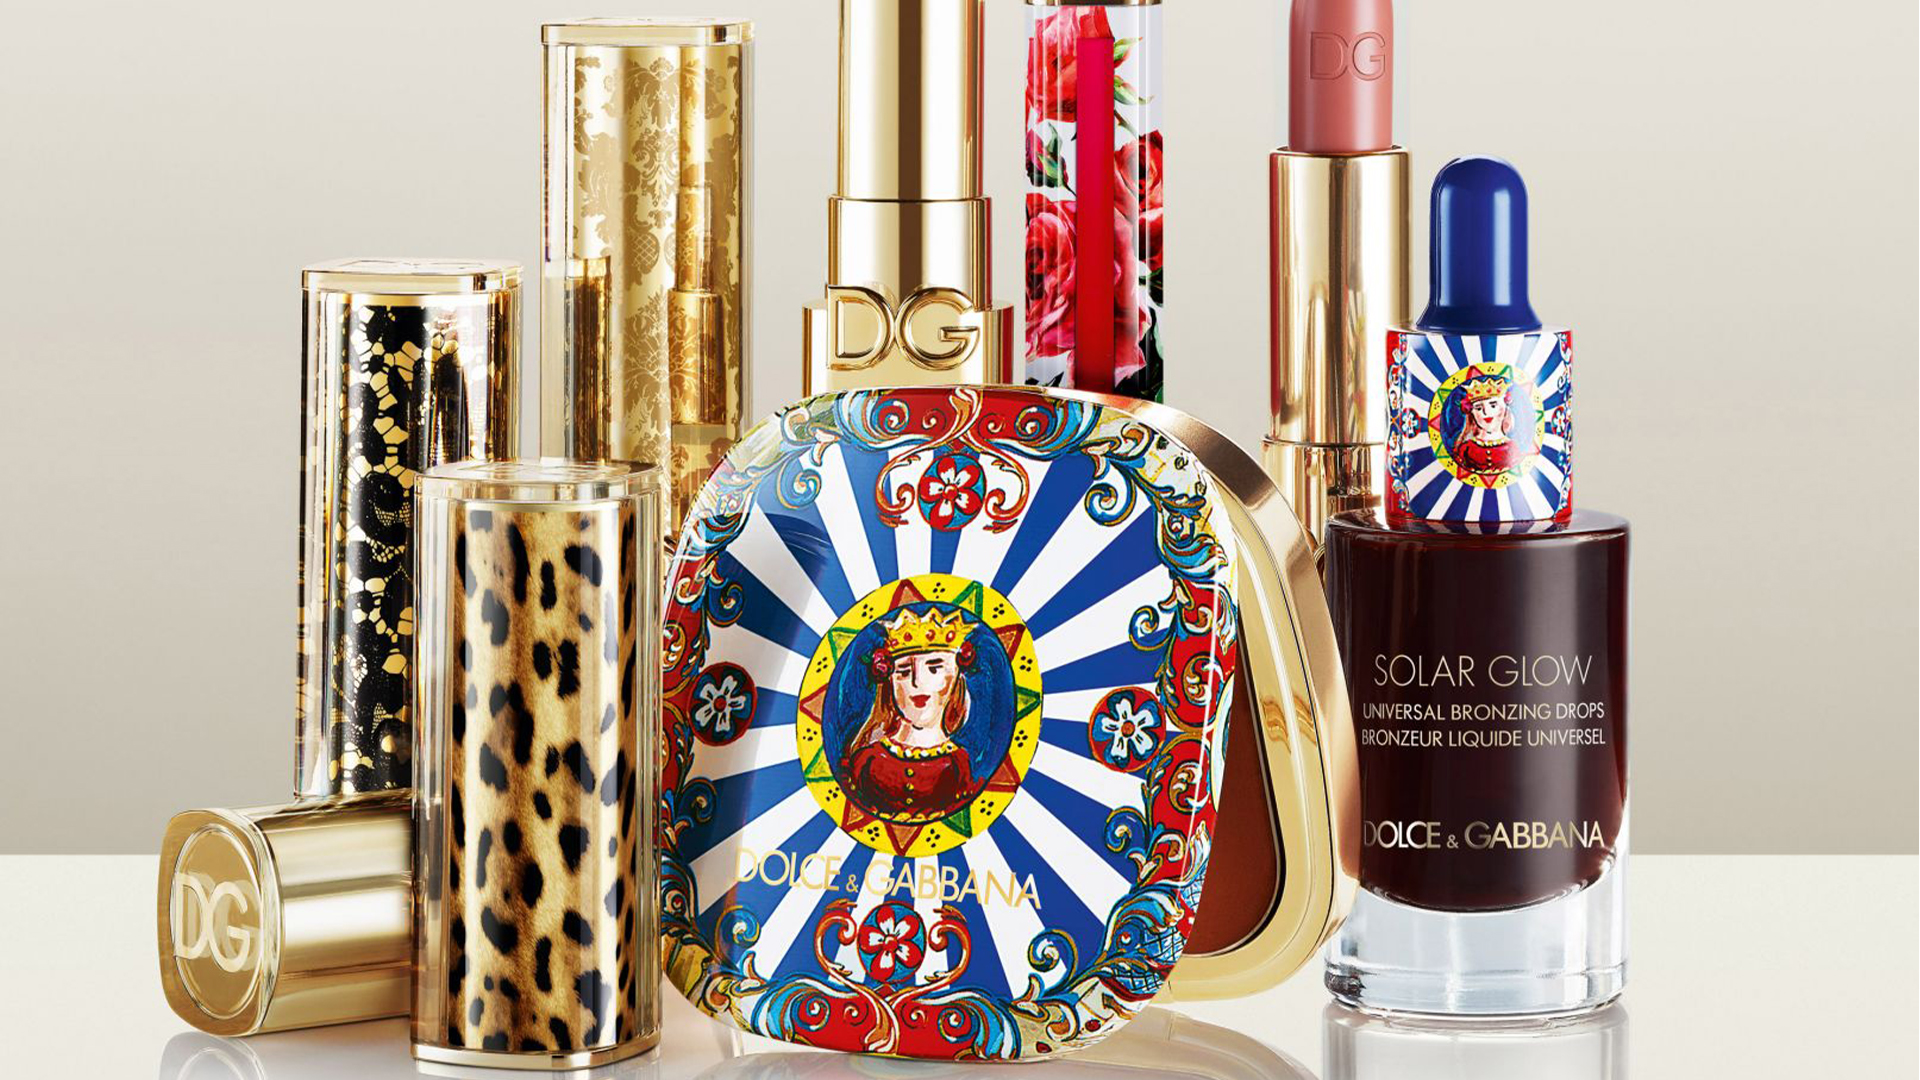 Dolce & Gabbana takes beauty in-house - TheIndustry.beauty